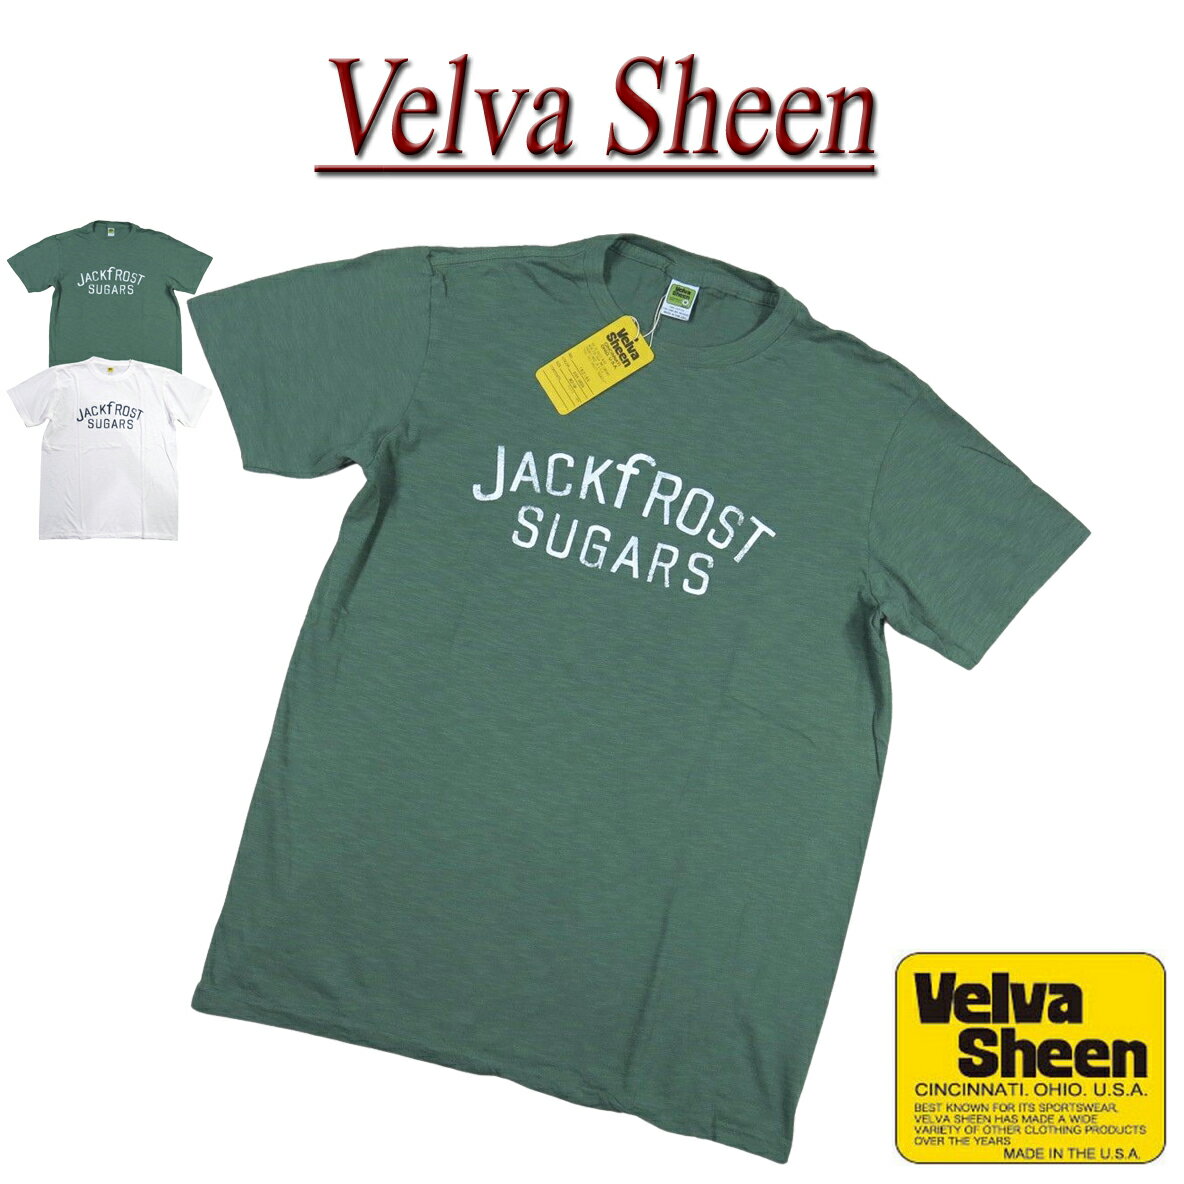  je631 新品 Velva Sheen USA製 JACK FROST SUGARS TEE 半袖 スラブ Tシャツ 162195 メンズ ベルバシーン ティーシャツ イエローレーベル Made in USA 